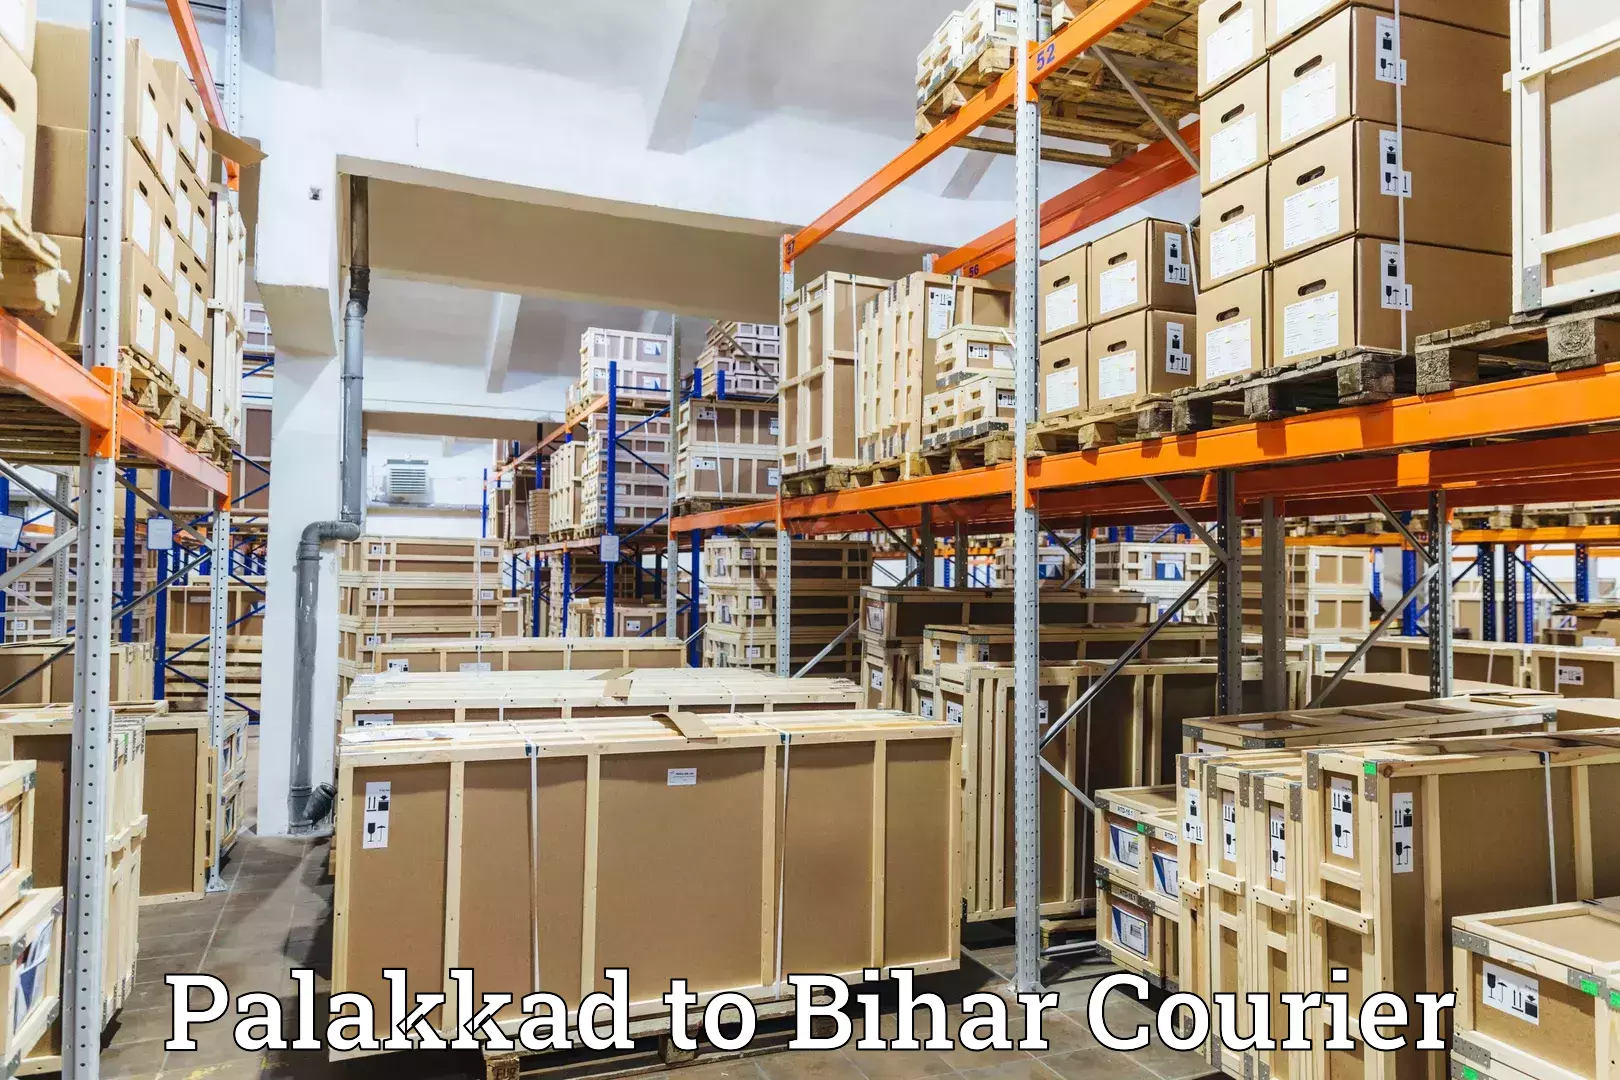 On-demand shipping options Palakkad to Katoria